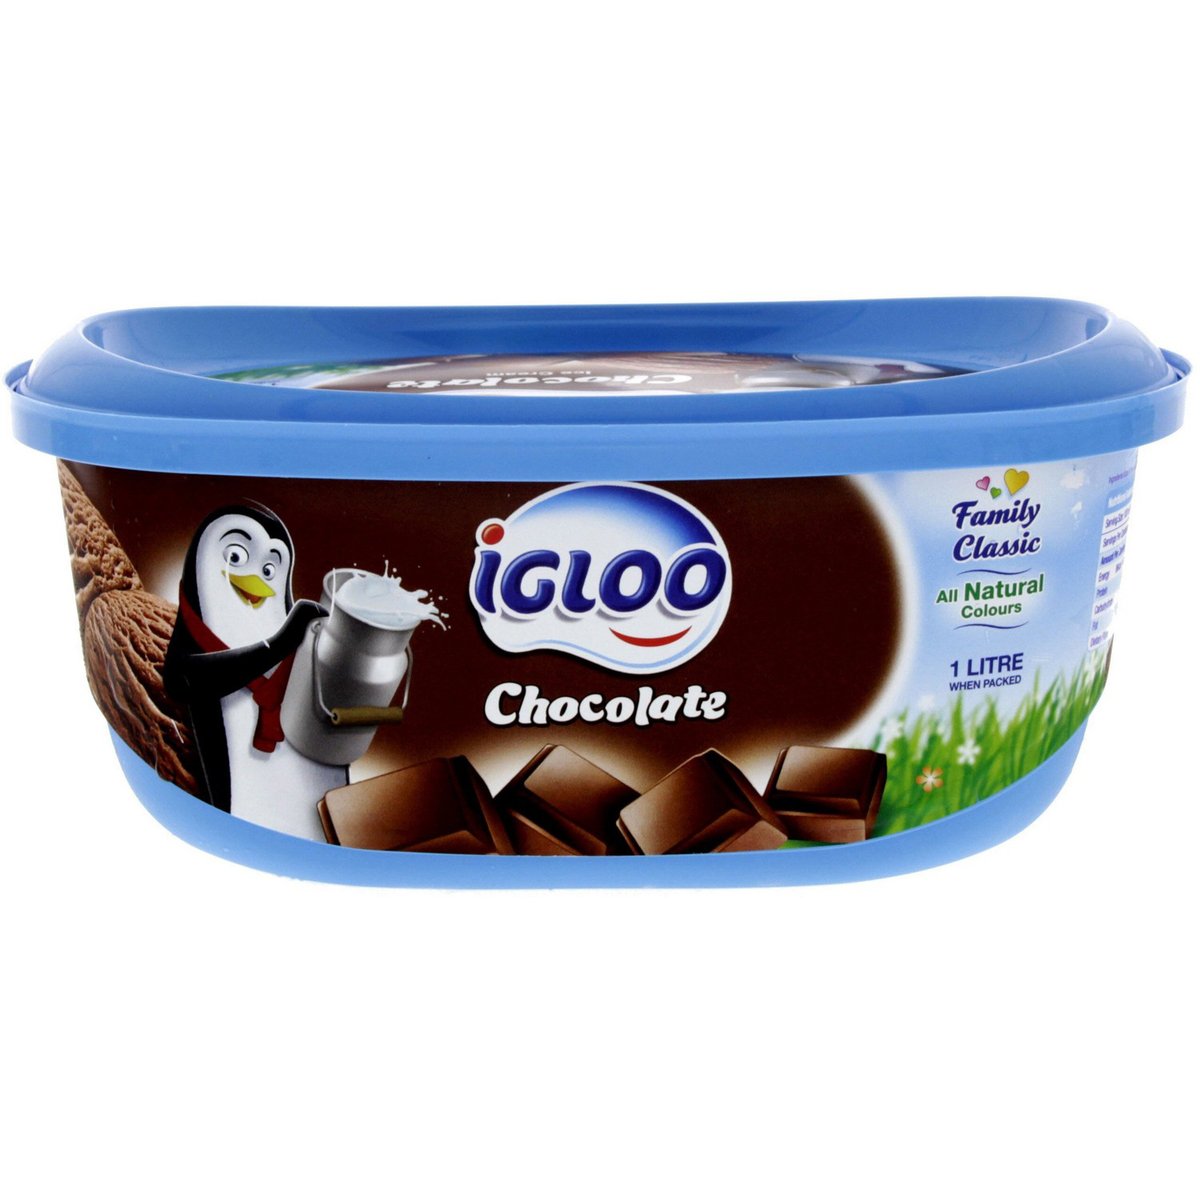 Buy Igloo Chocolate Ice Cream 1 Litre Online at Best Price | Ice Cream Take Home | Lulu Kuwait in Saudi Arabia